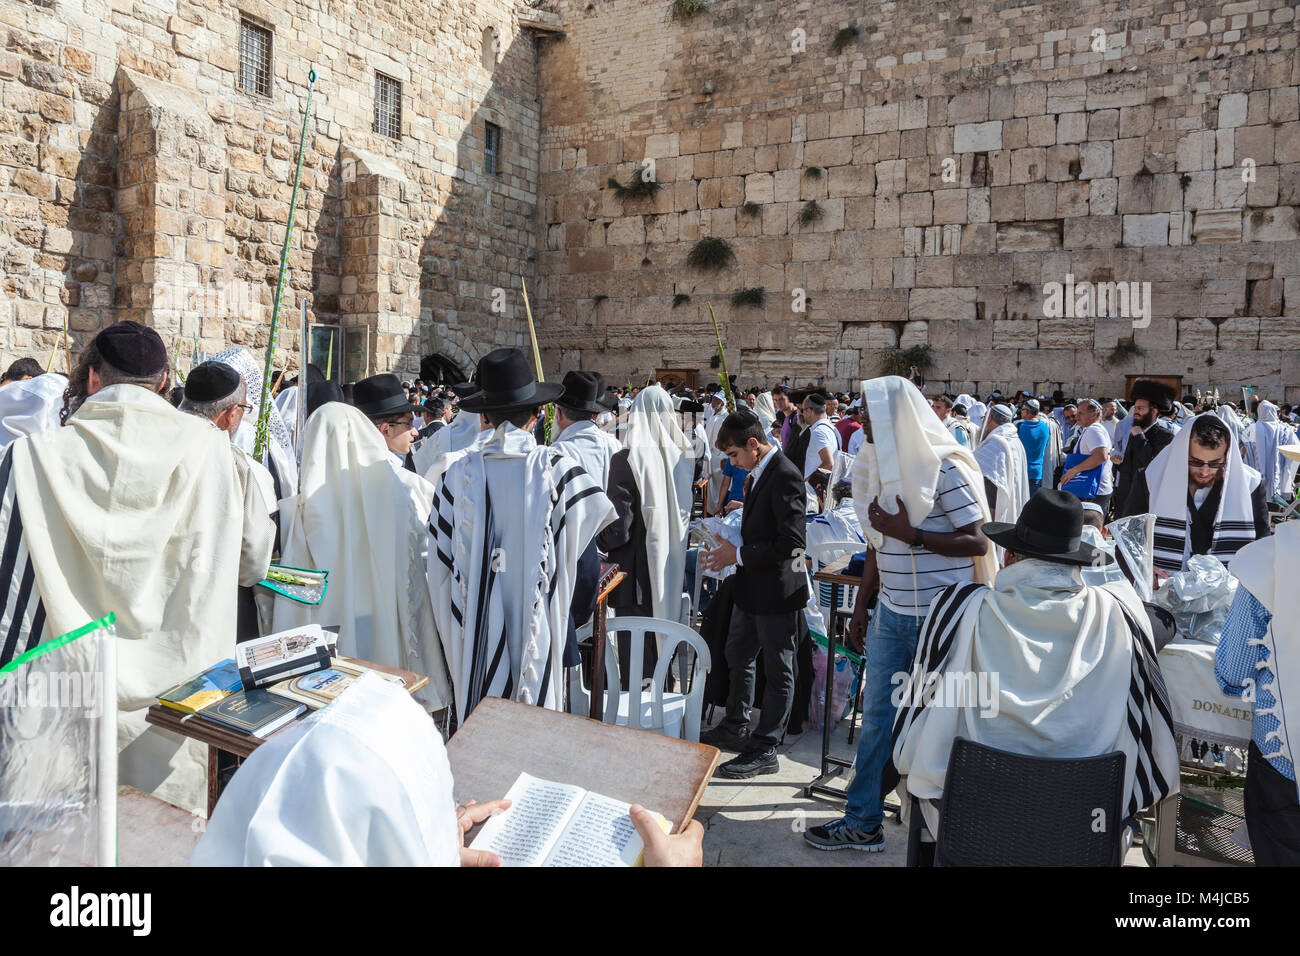 Huge crowd of faithful Jews Stock Photo